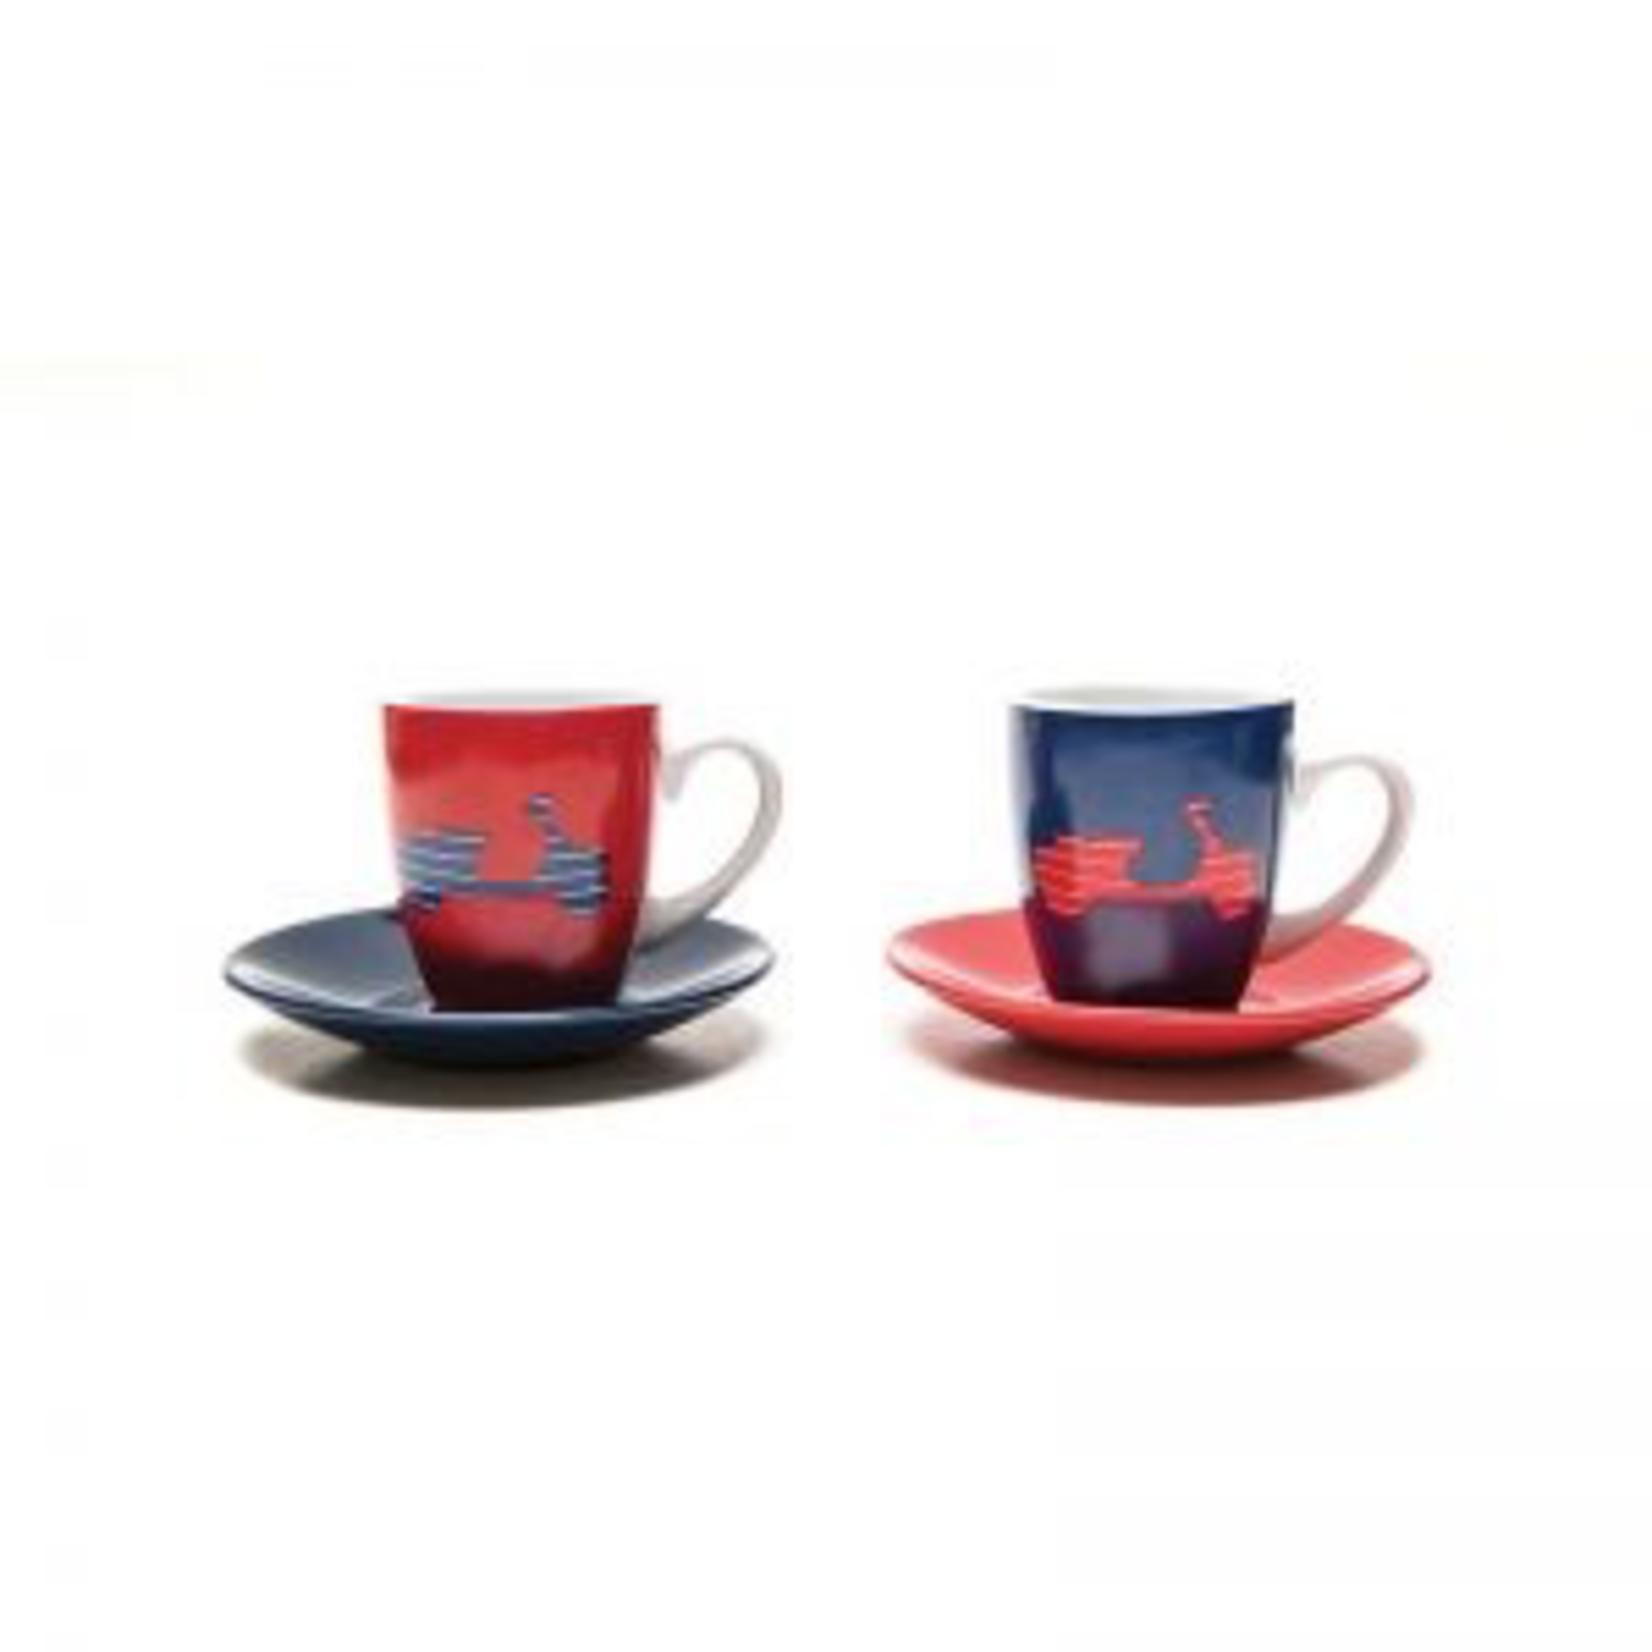 Lifestyle Espresso Cup Set, 2-Piece Vespa Red/Blue